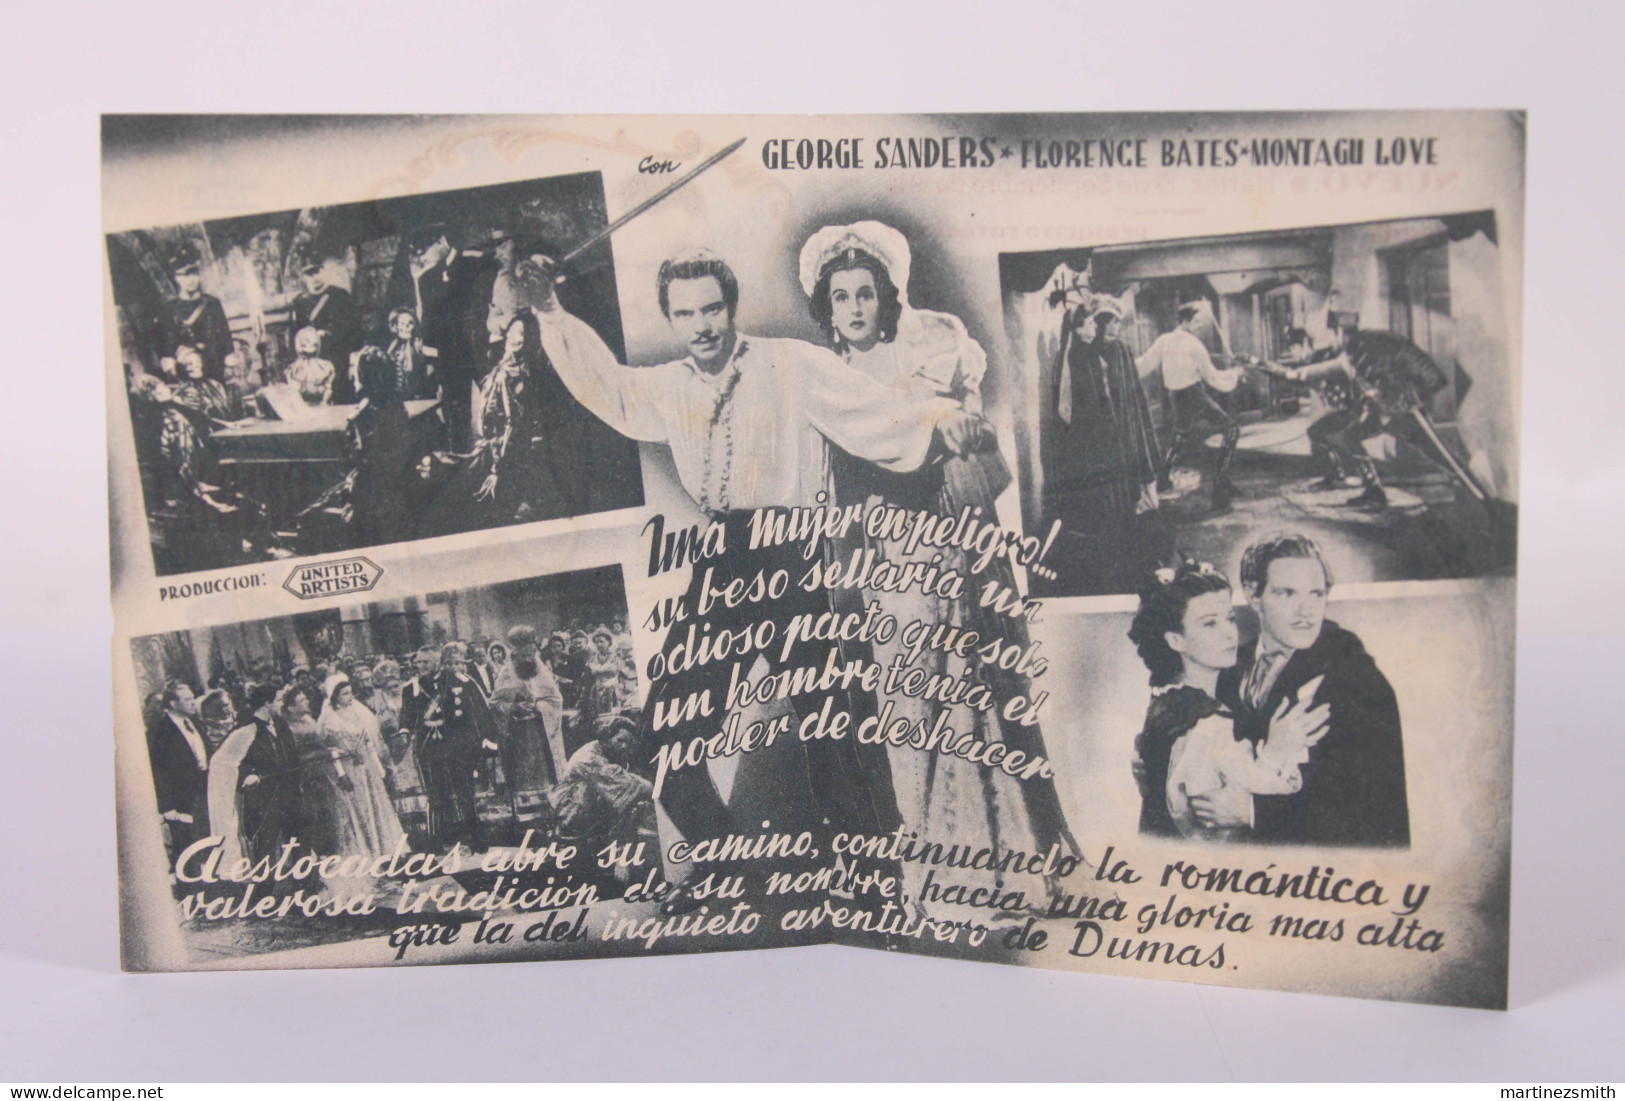 Original 1944 The Son Of Montecristo /Movie Advt Brochure - Louis Hayward, Joan Bennett, George Sanders Folded 12 X 1 Cm - Cinema Advertisement